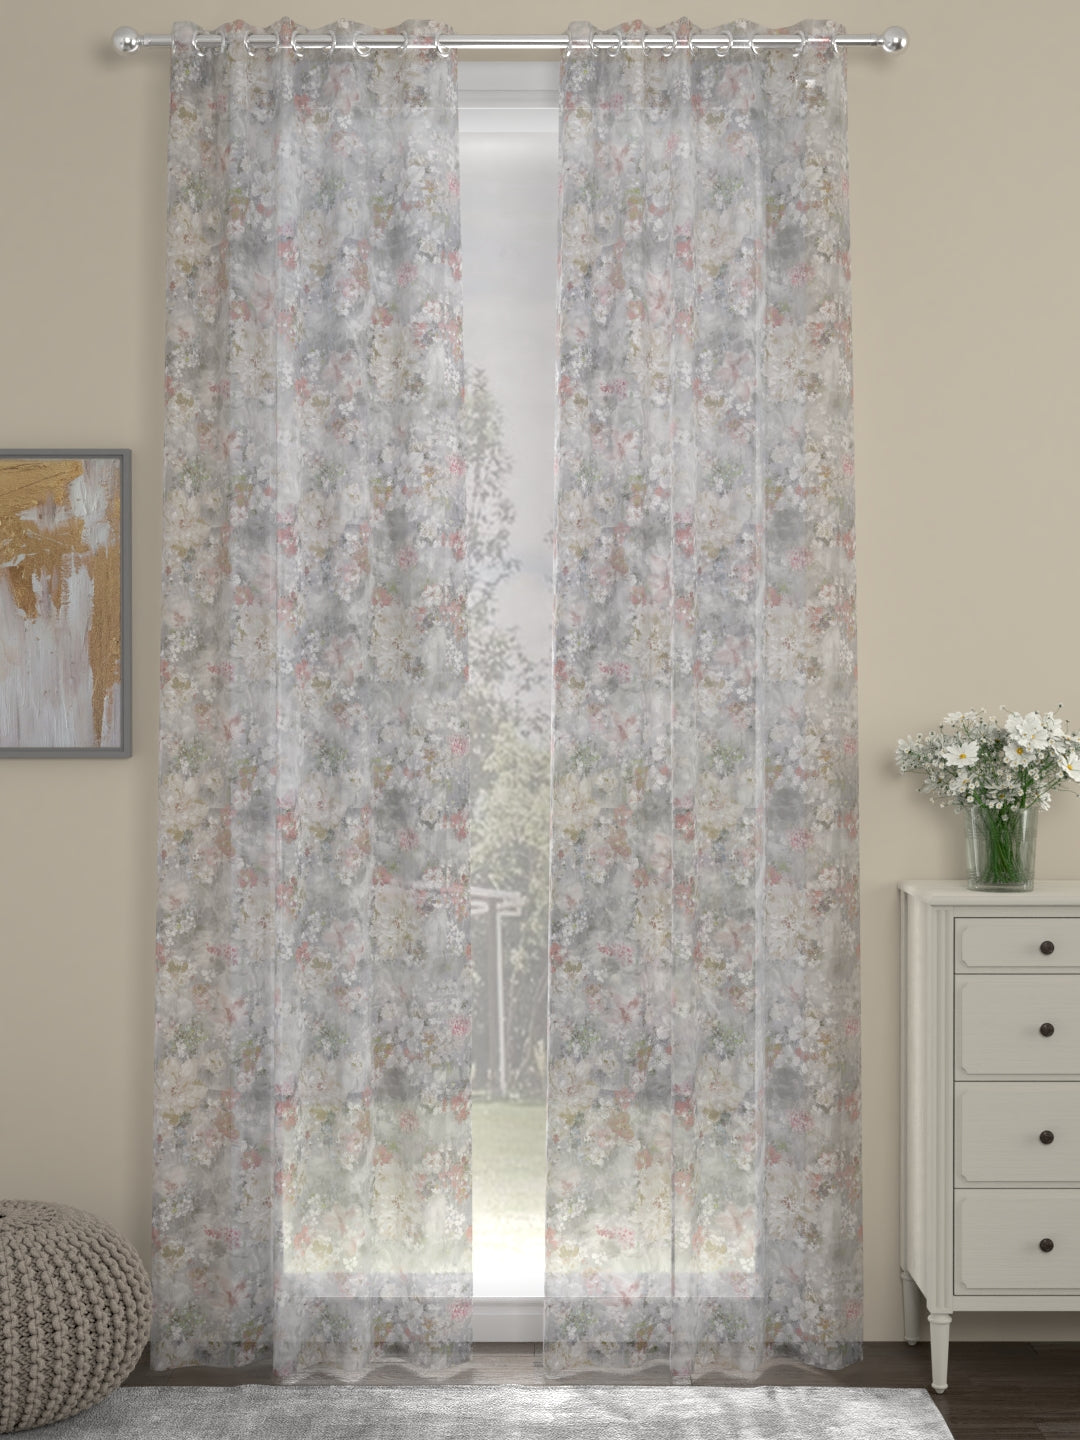 Clara sheer curtains